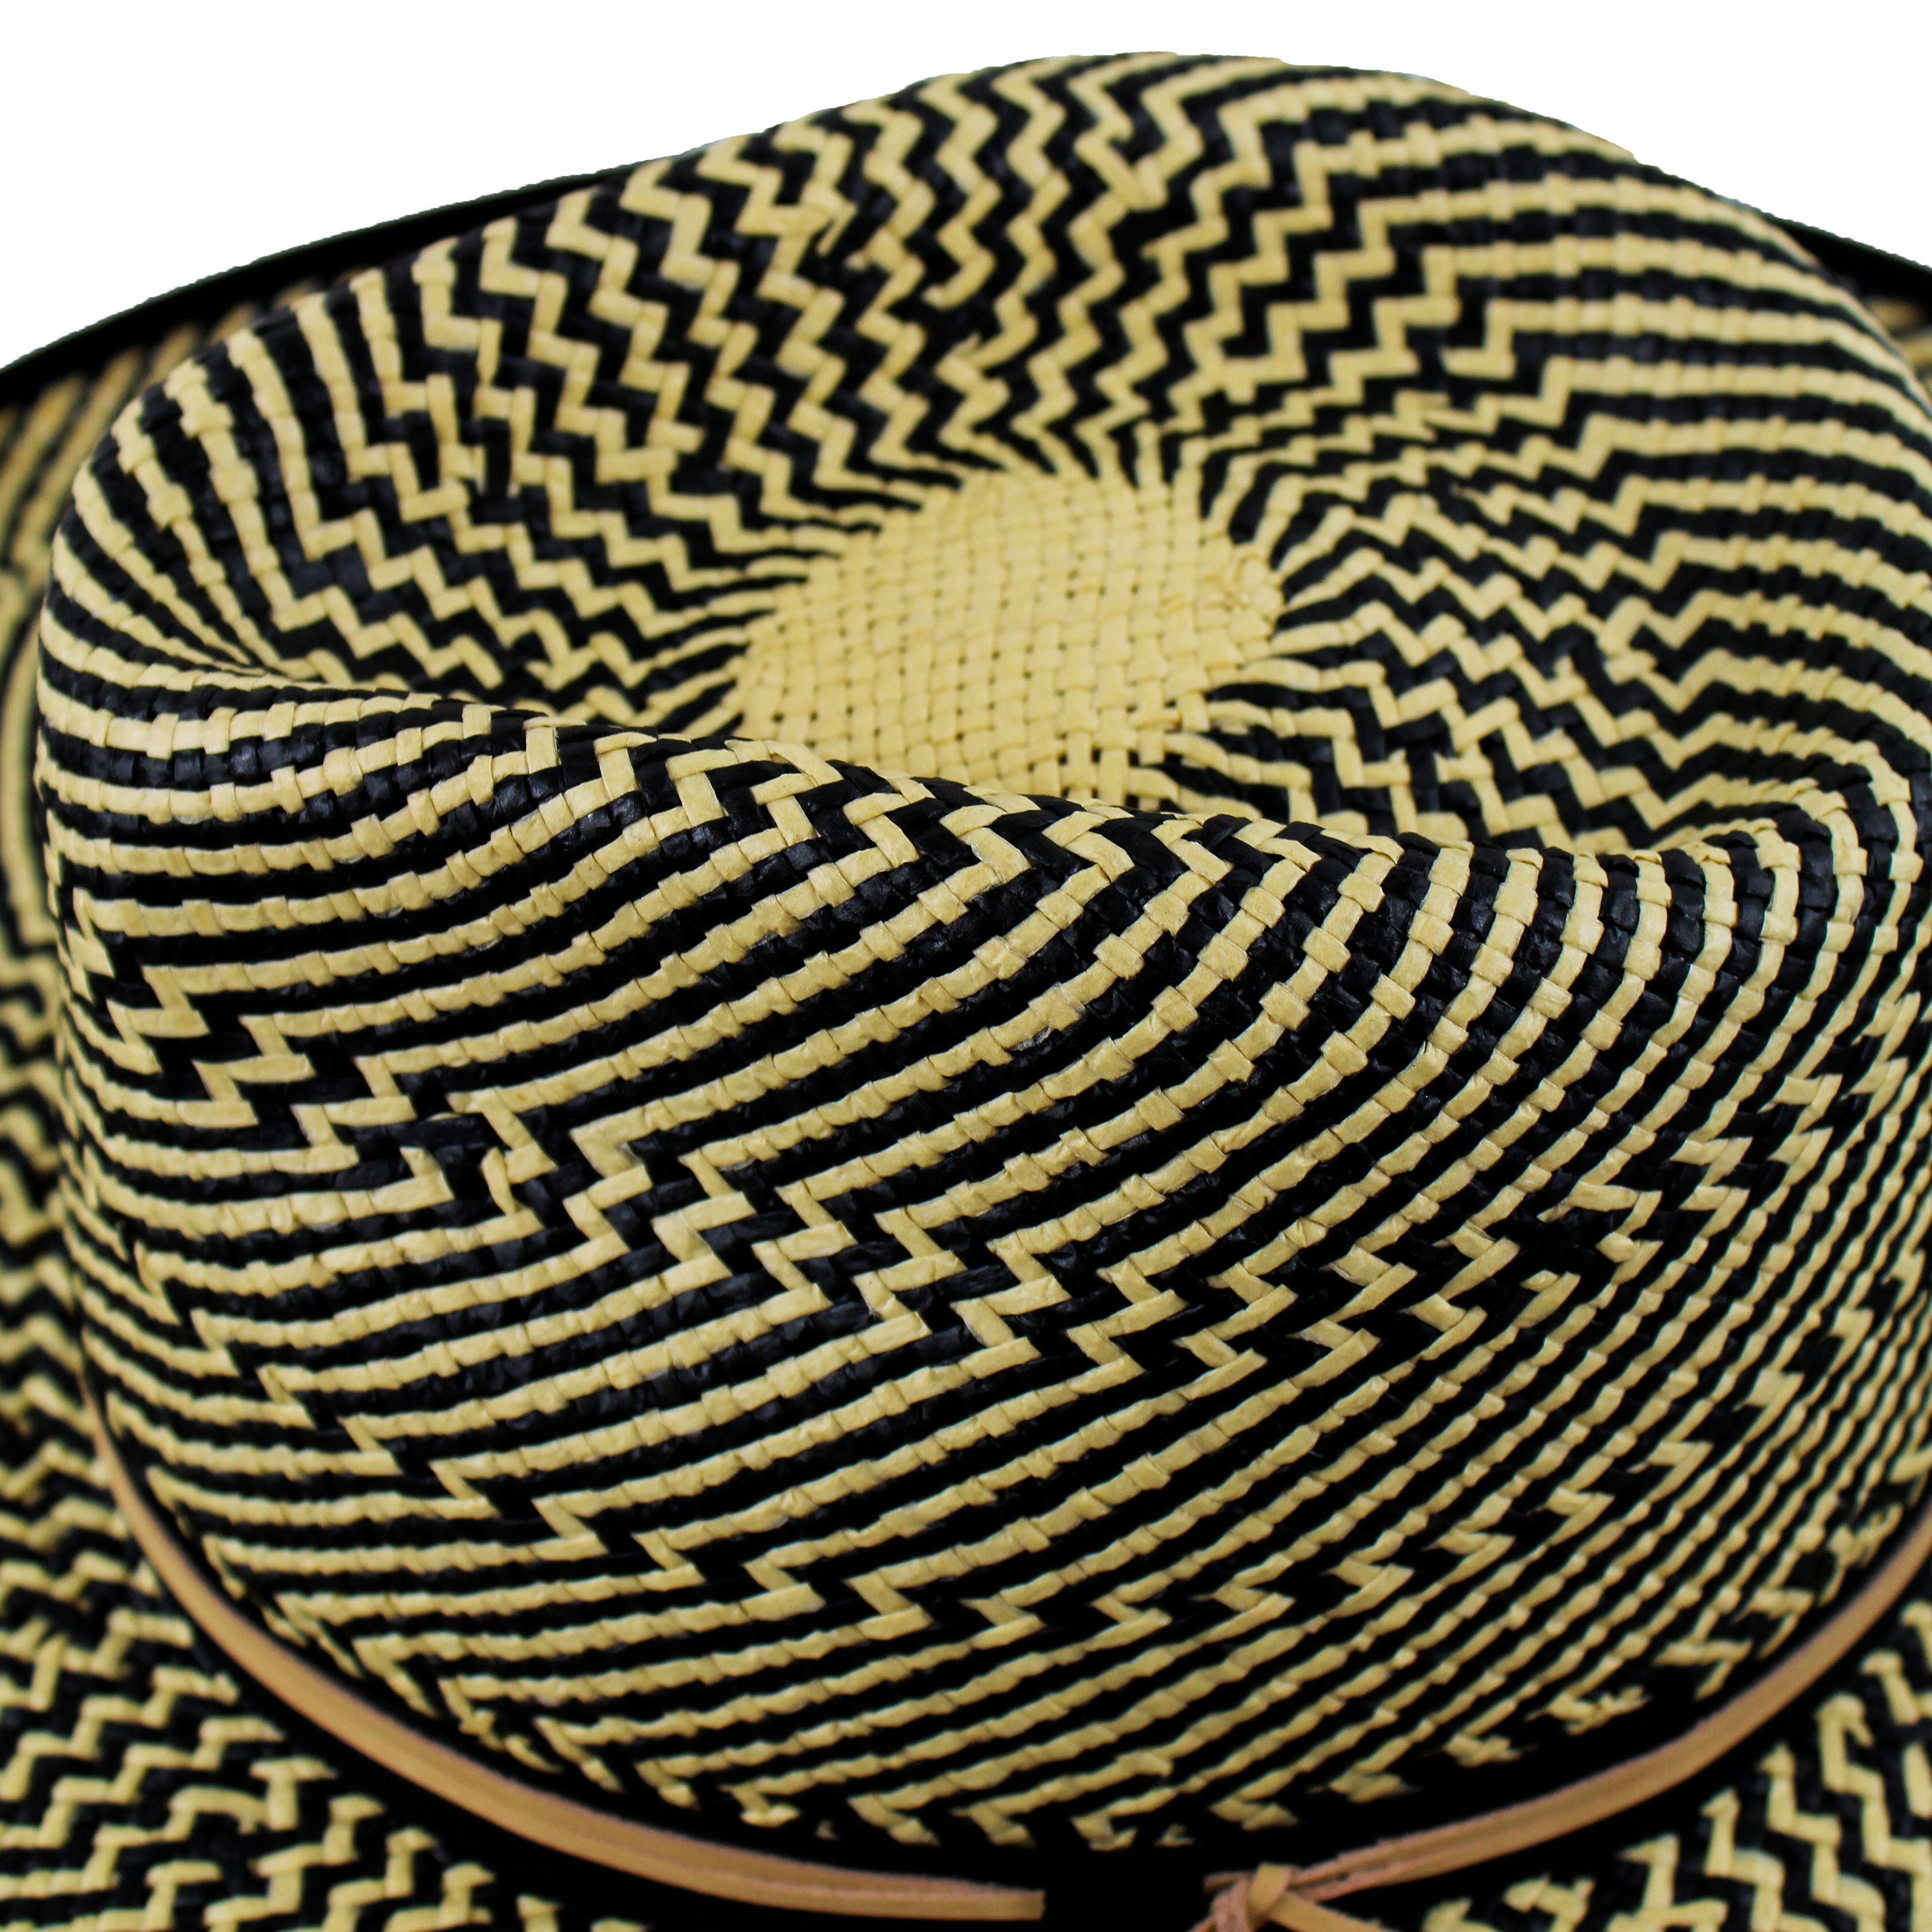 Galilee Rancher Straw Hat - Black/Tan